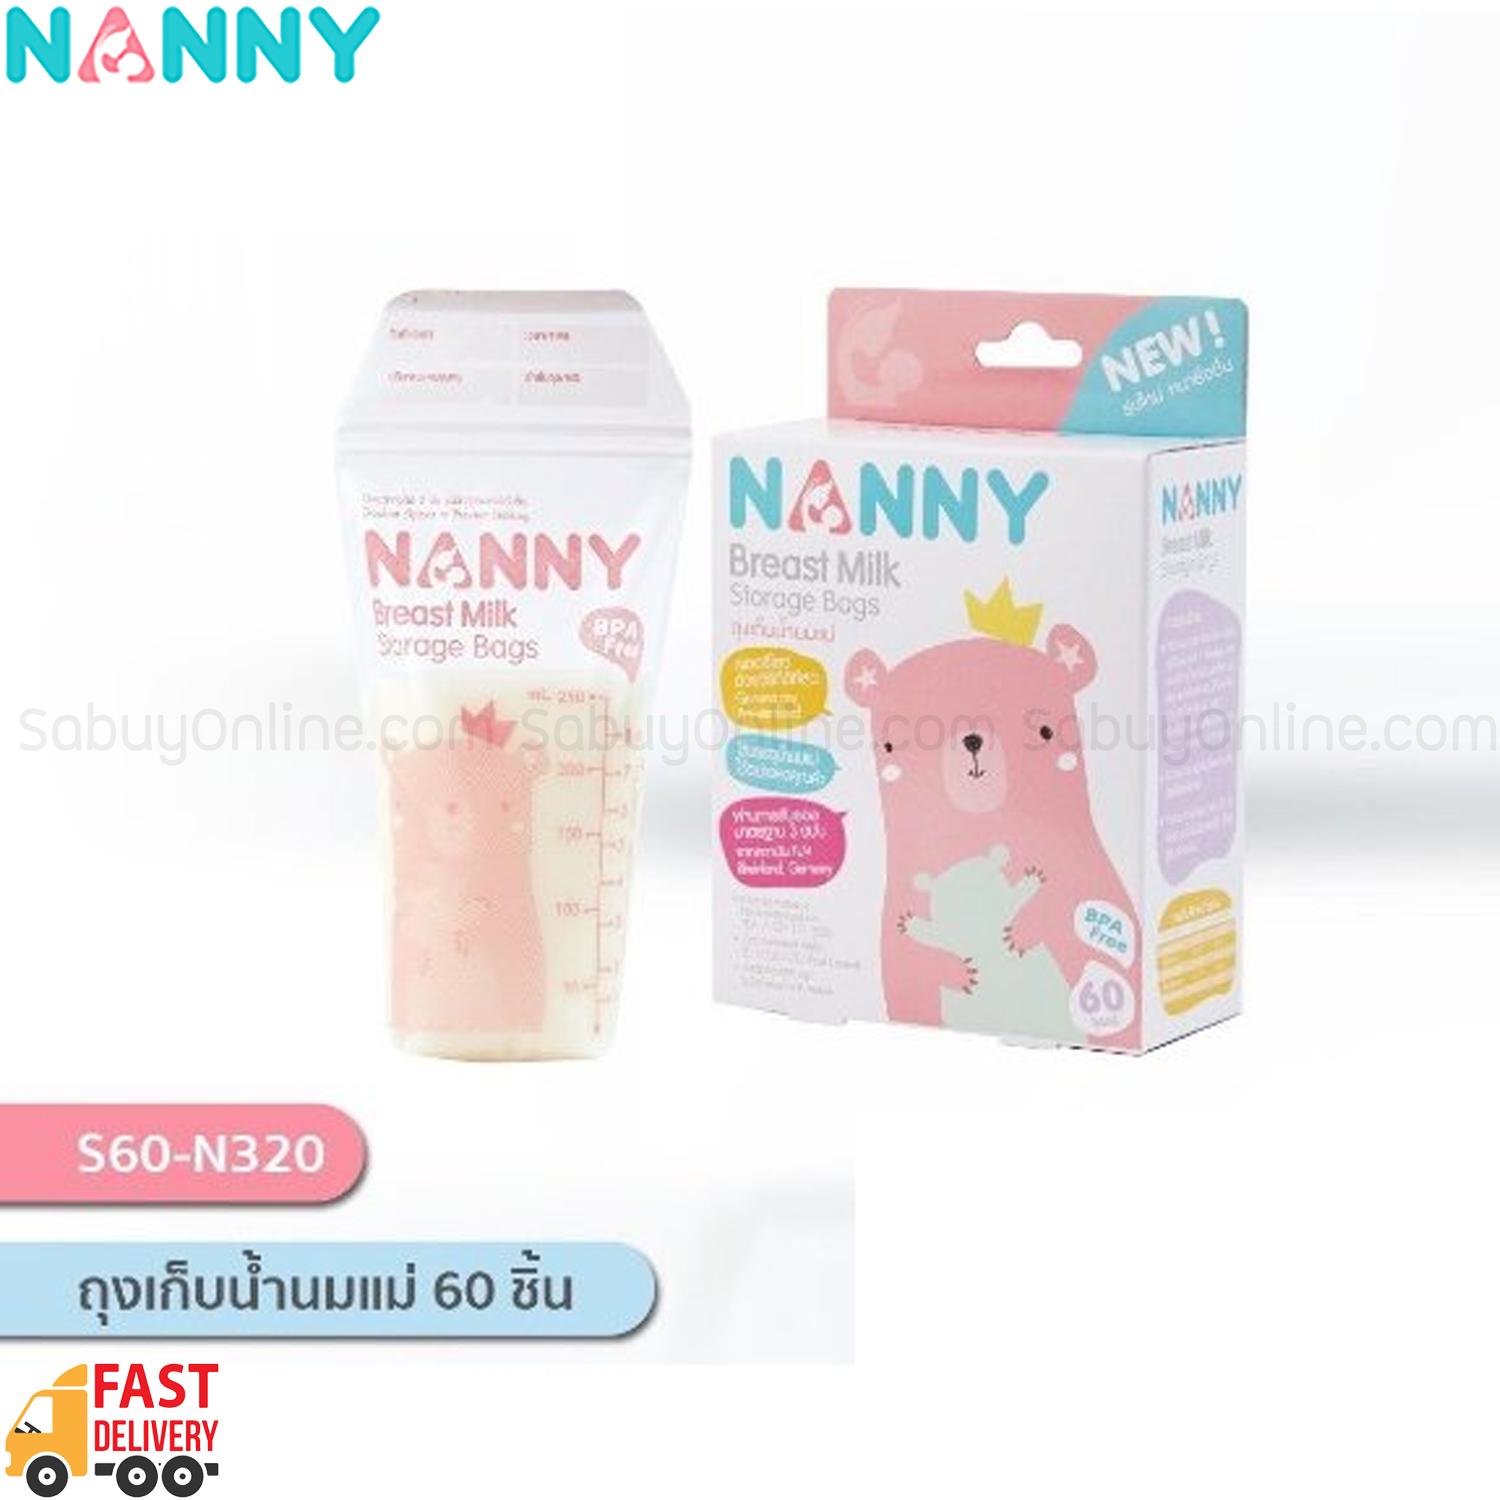 NANNY ถุงเก็บน้ำนมแม่ 60 ชิ้น ขนาด 8 ออนซ์ - Breast Milk Storage 60 pcs. 8 oz